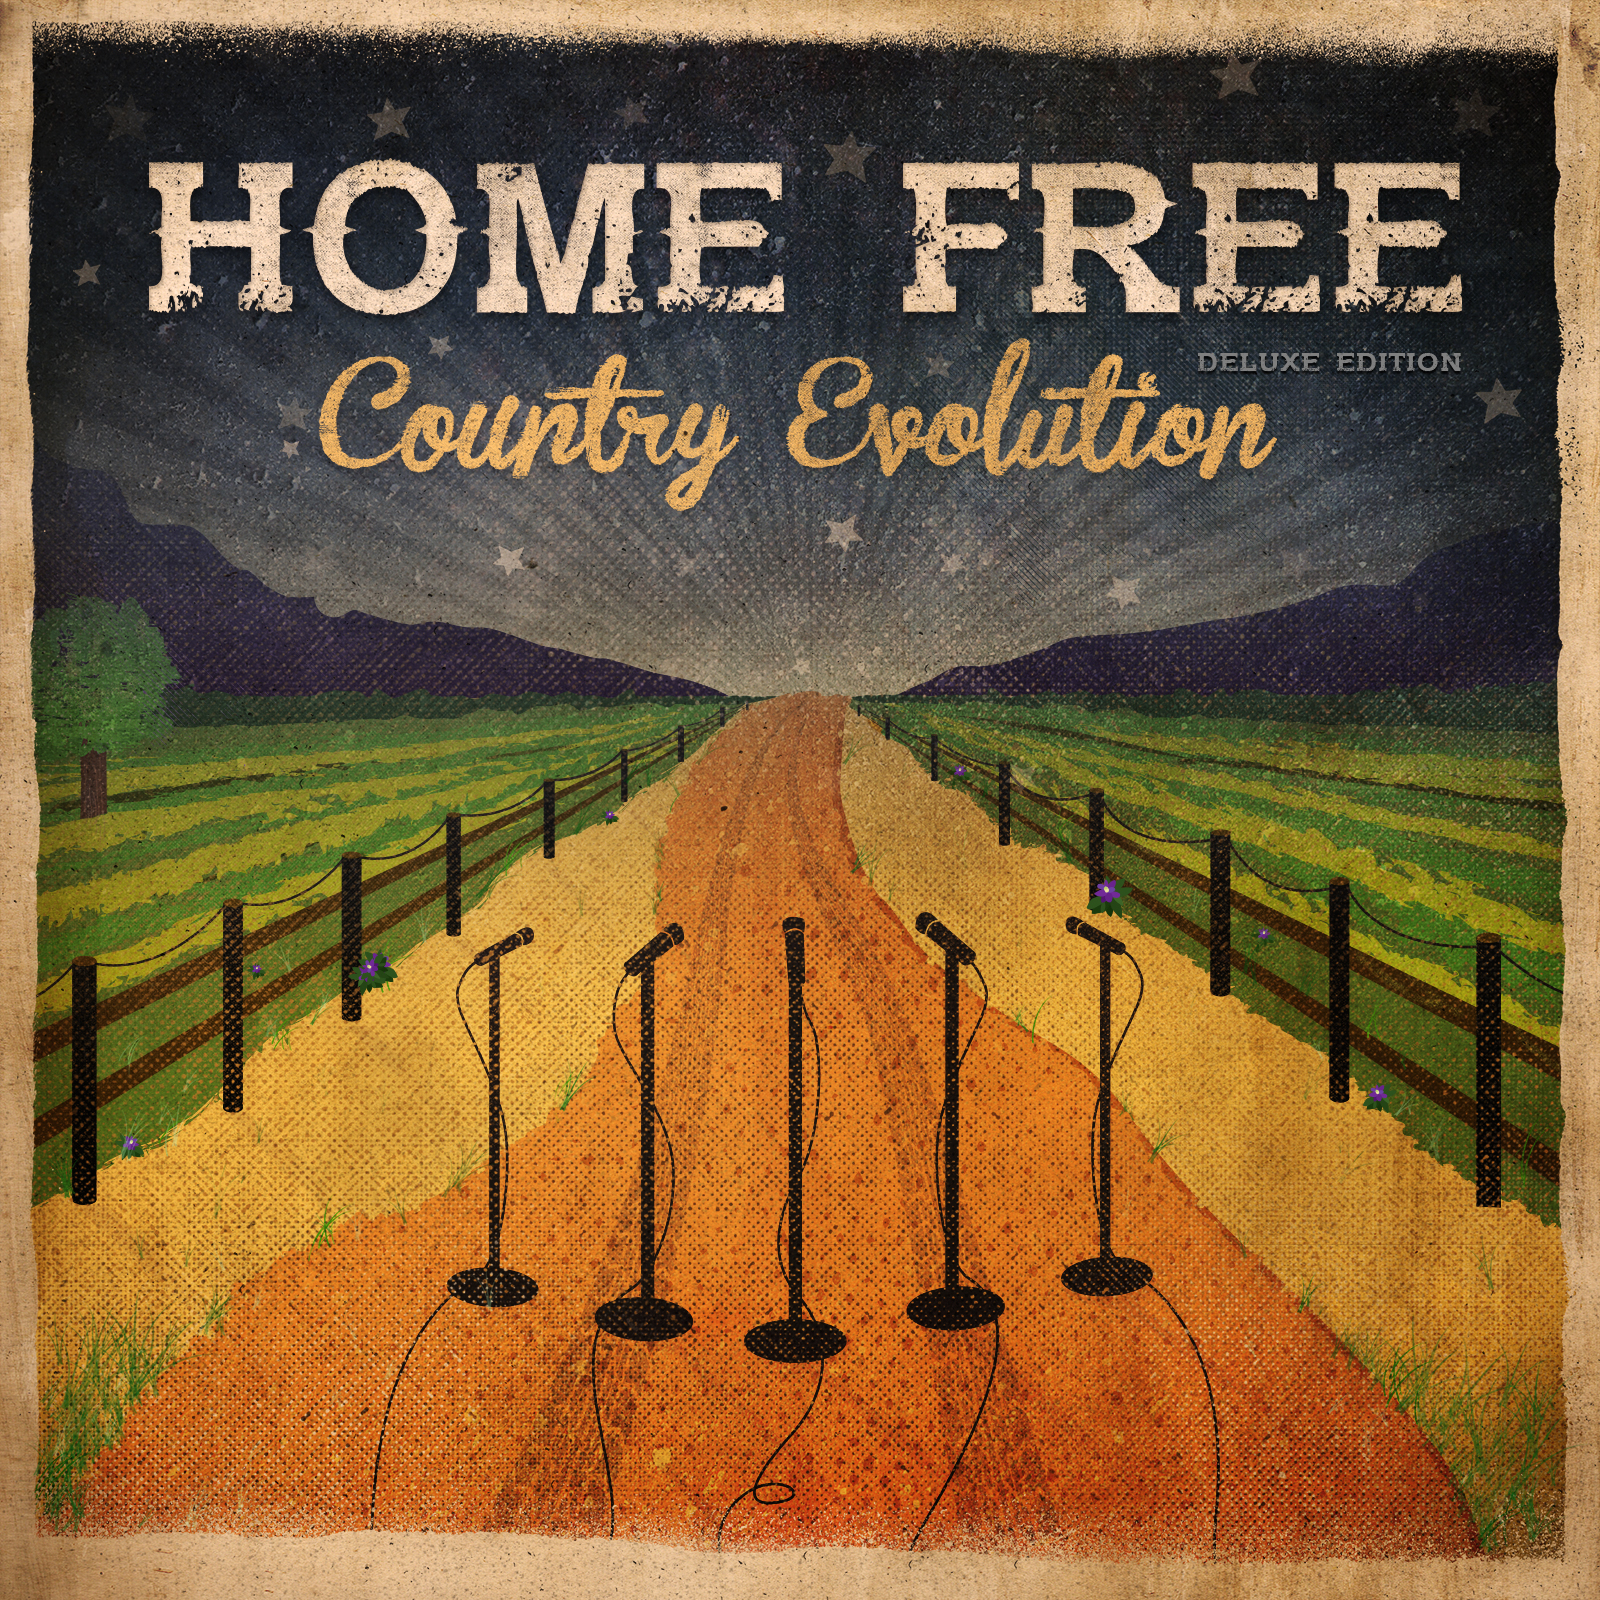 COUNTRY SENSATION HOME FREE RELEASES THIRD STUDIO ALBUM, COUNTRY